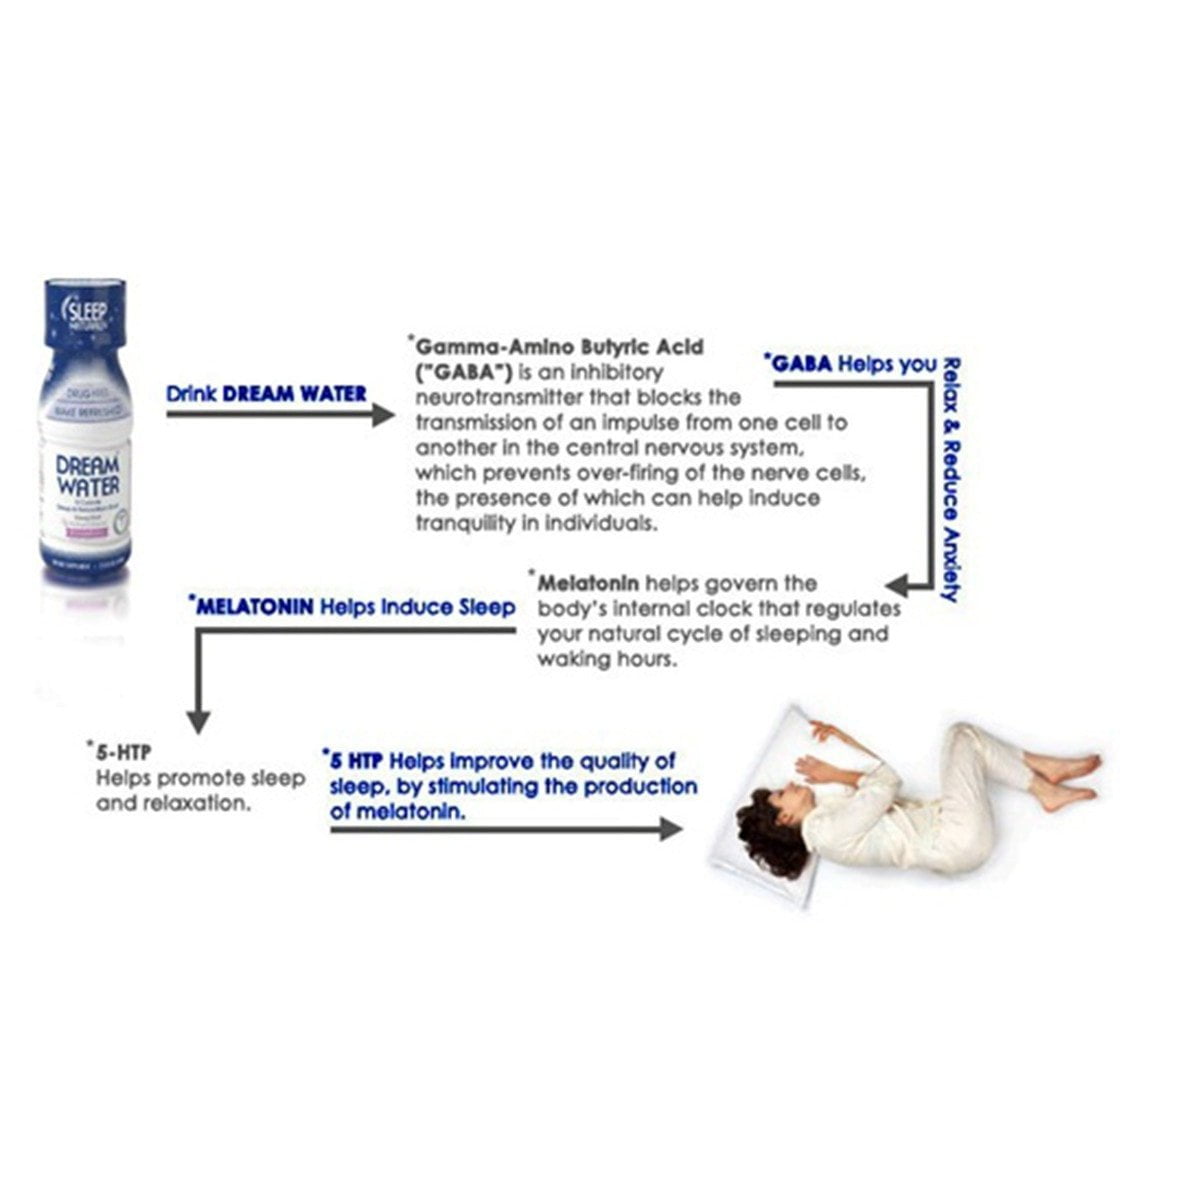 Dream Water Natural Sleep & Relaxation Aid Shot, 0 Calorie, GABA, MELATONIN, 5-HTP, 2.5oz Shot, Snoozeberry, 12 Value Pack, Product image 4